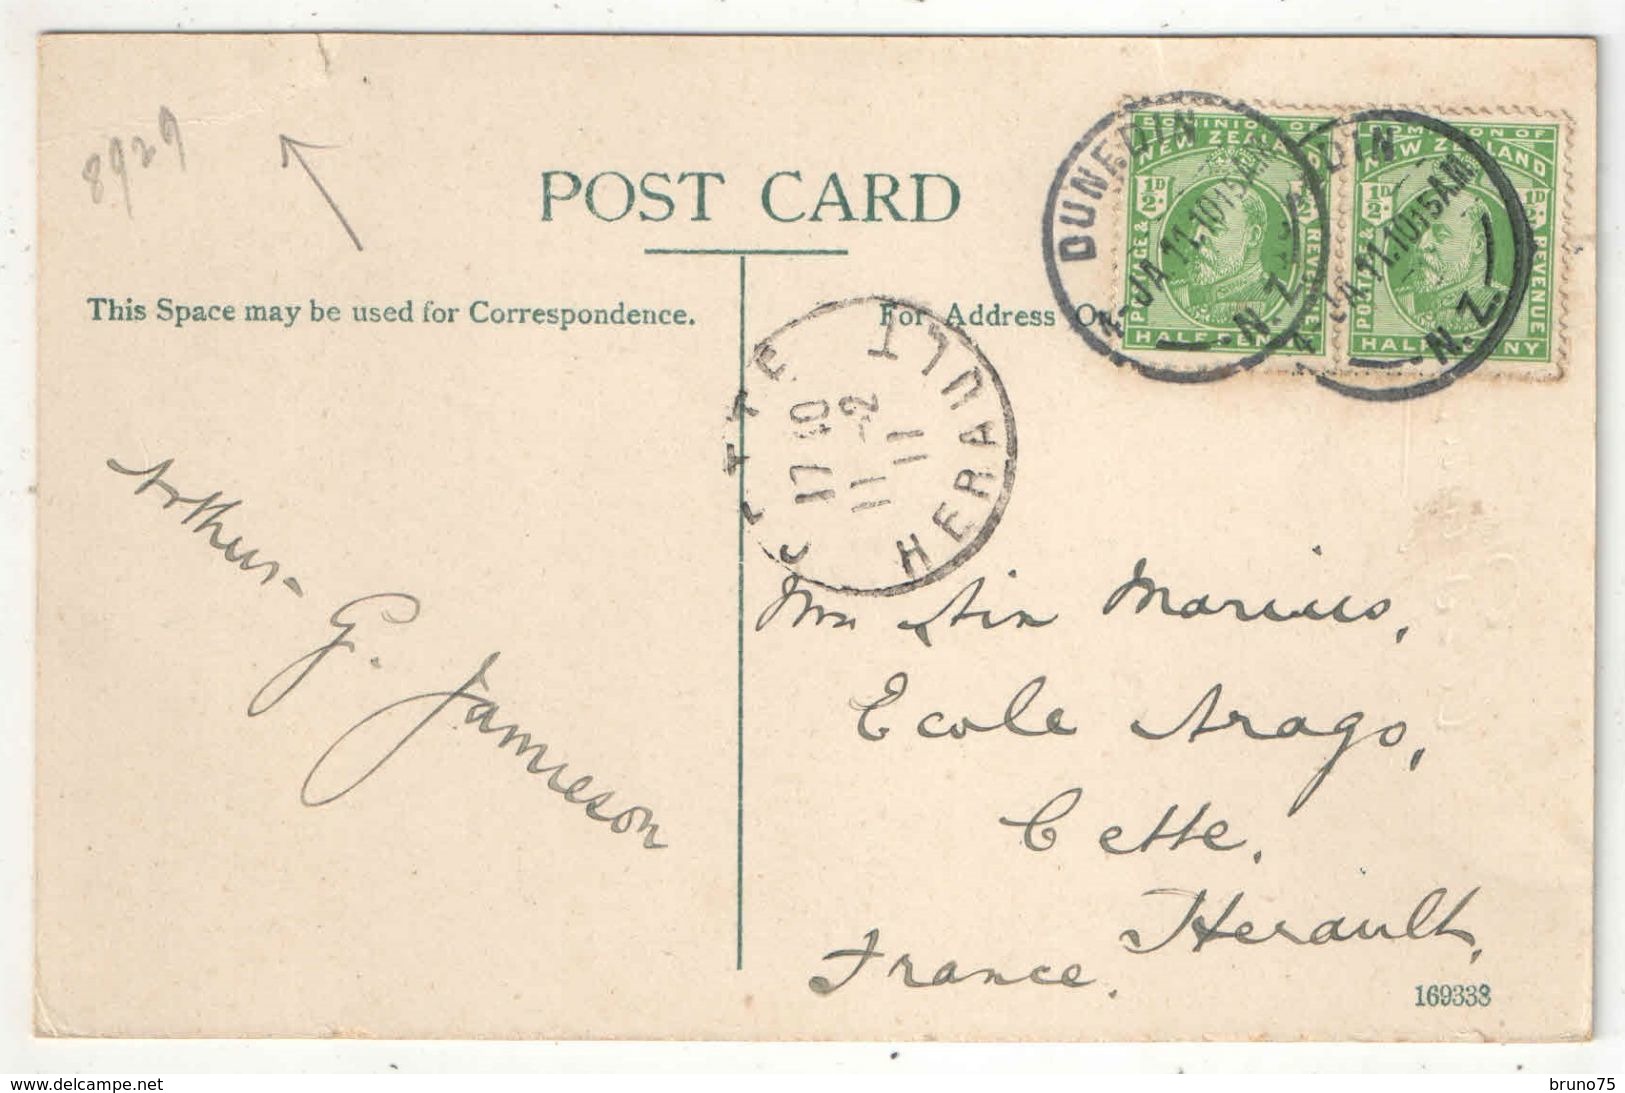 Post Office, Melbourne - 1911 - Melbourne